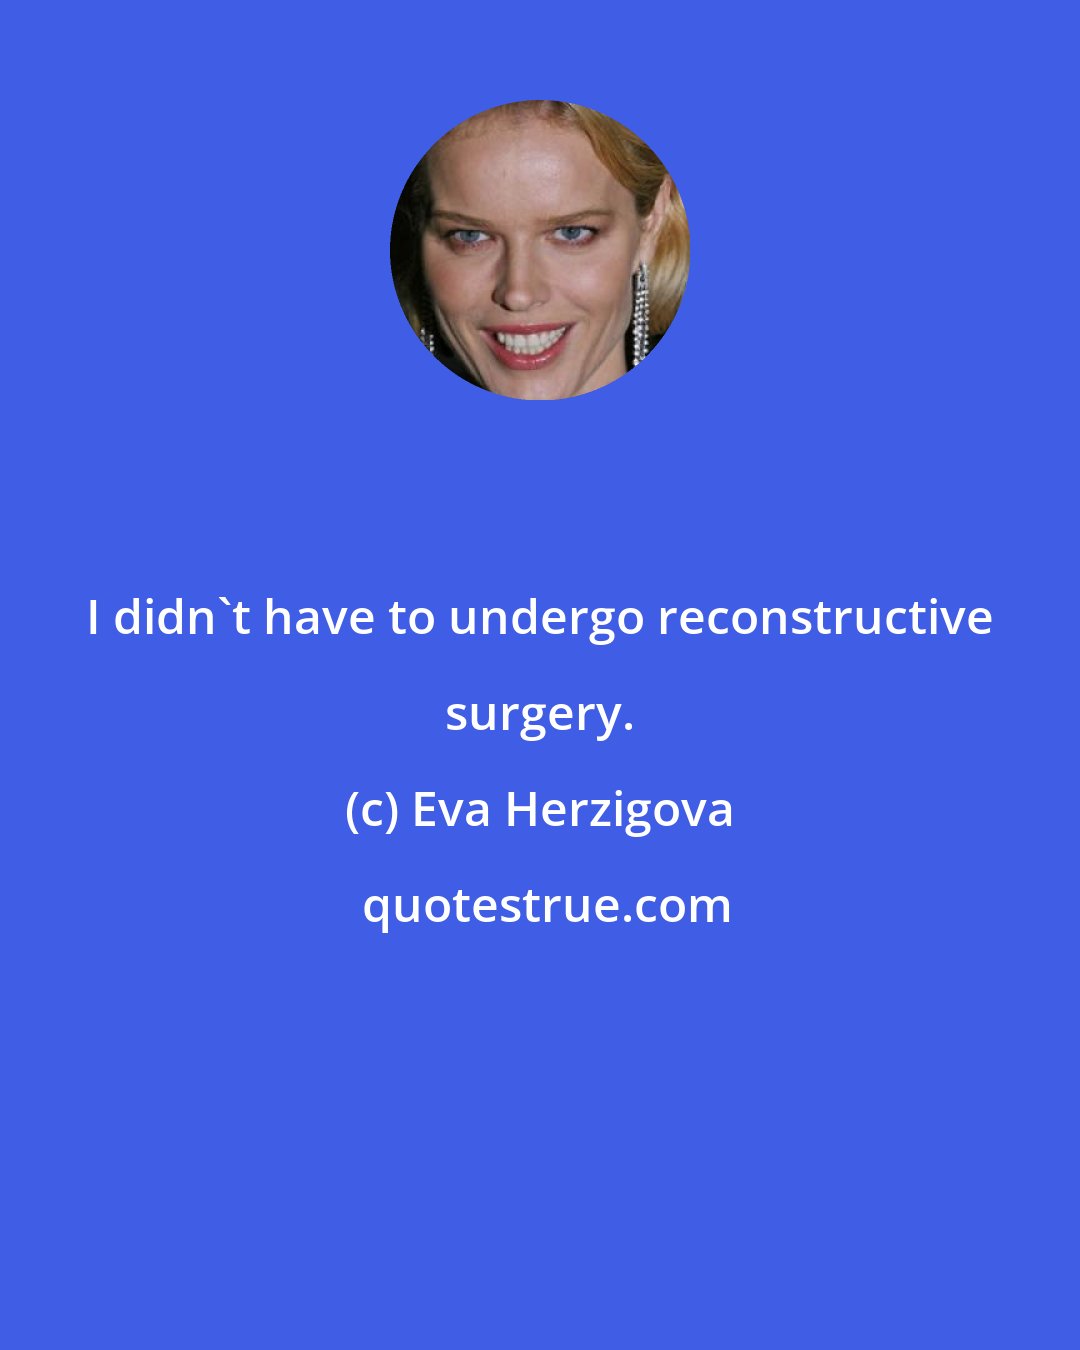 Eva Herzigova: I didn't have to undergo reconstructive surgery.